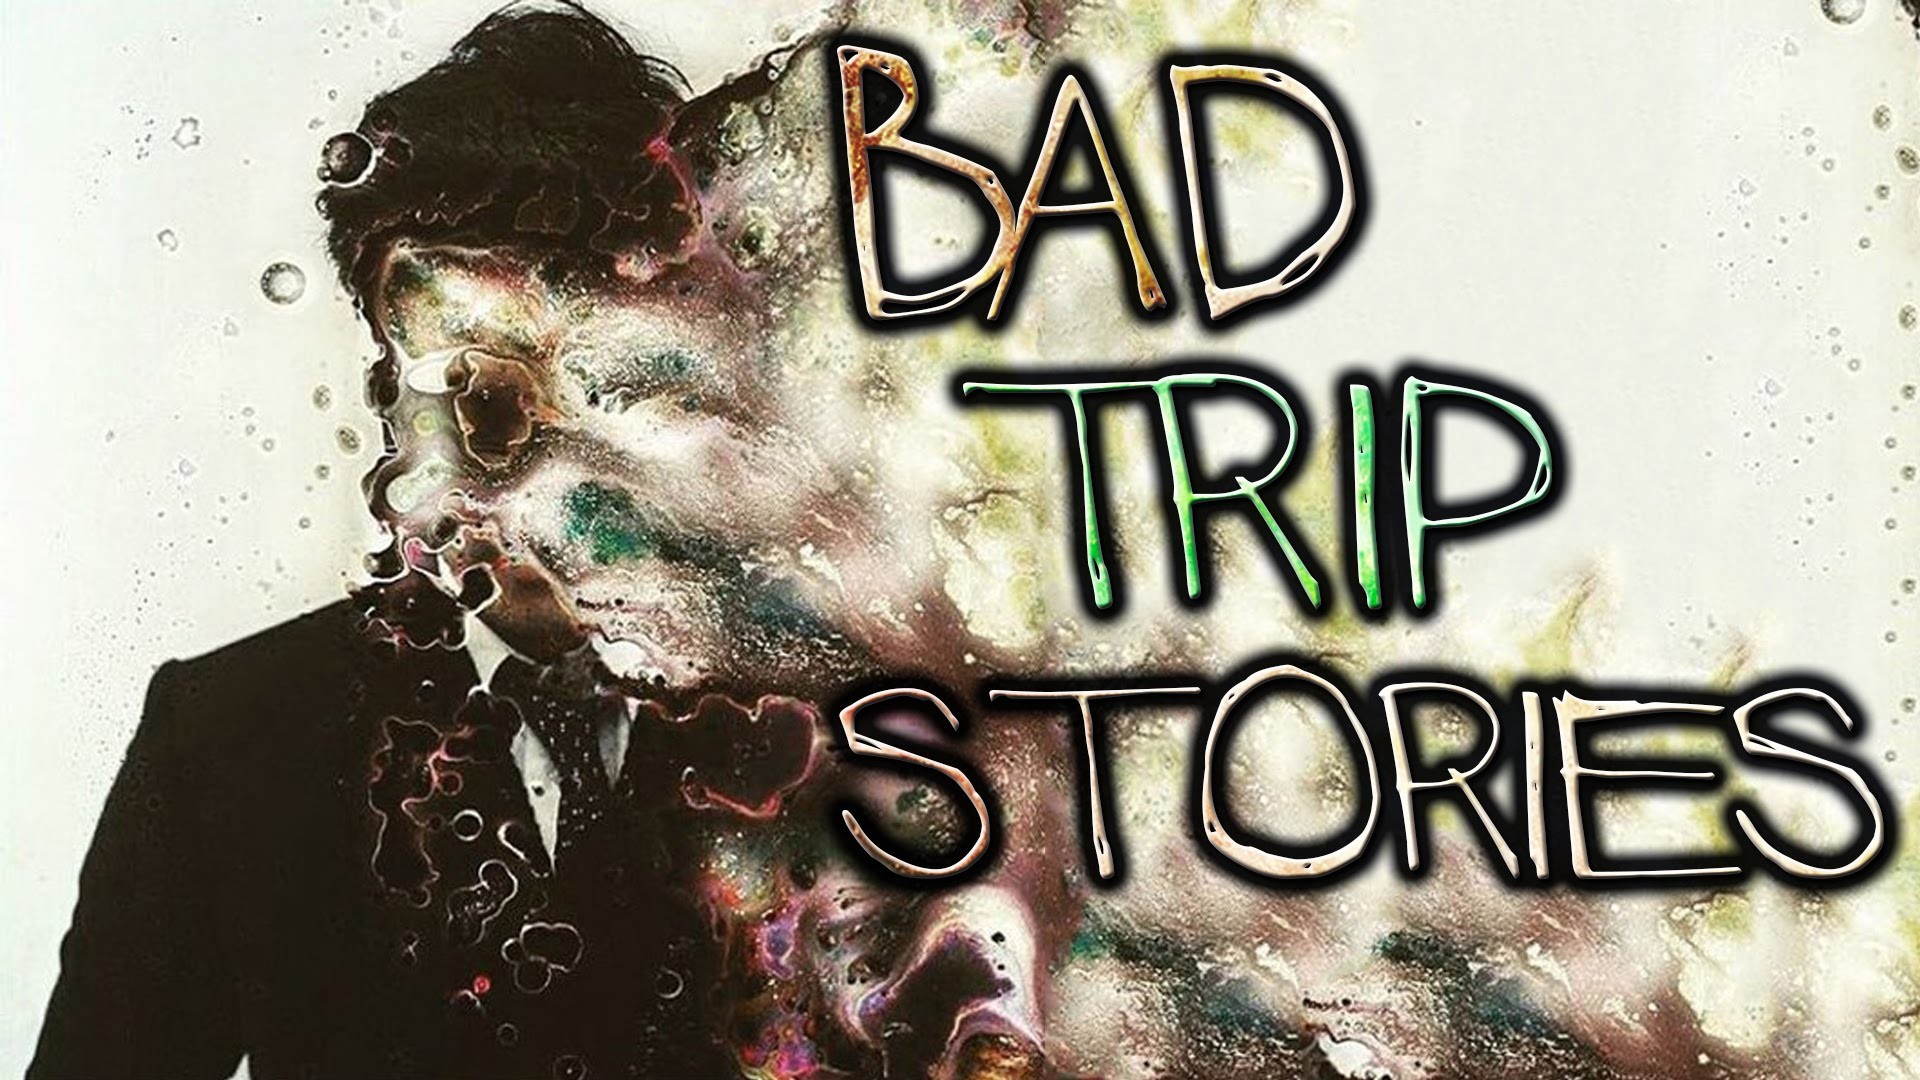 1920x1080 3 TRUE Bad Trip Stories [Acid // LSD]